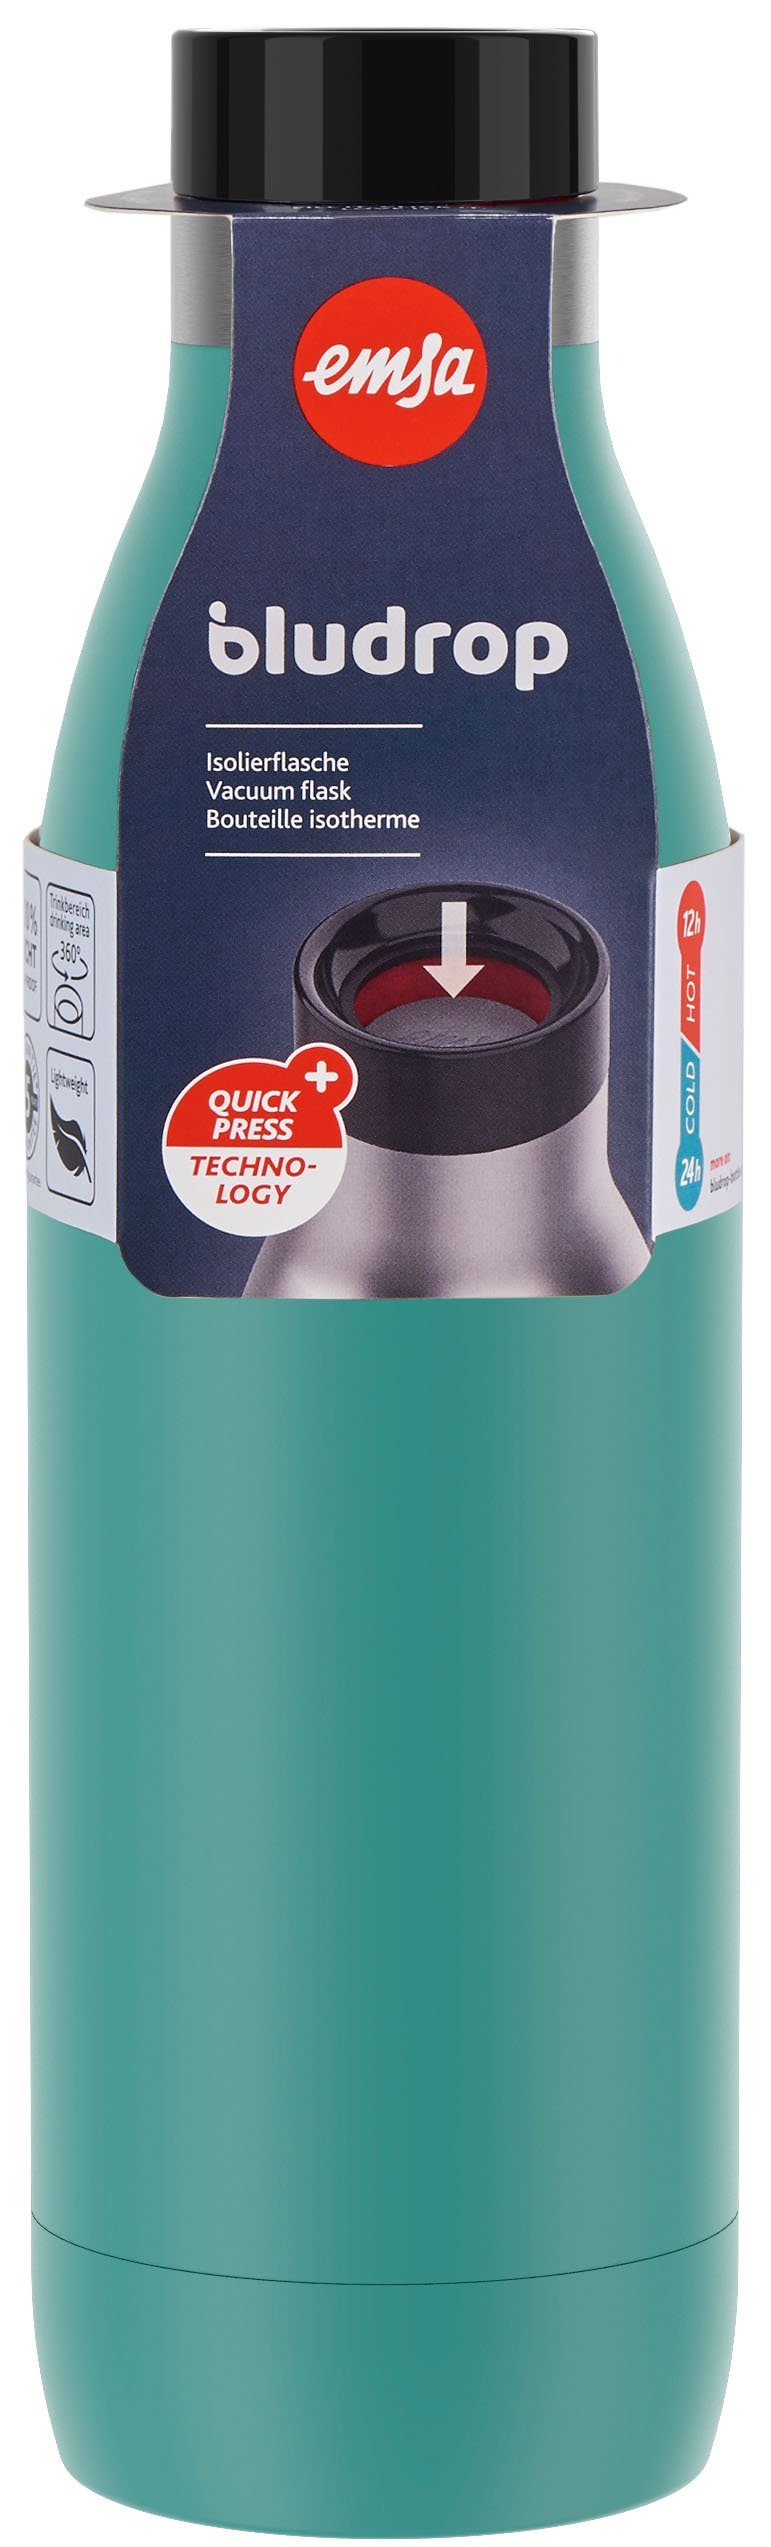 12h Trinkflasche Bludrop petrol Emsa kühl, Quick-Press Color, warm/24h Deckel, Edelstahl, spülmaschinenfest